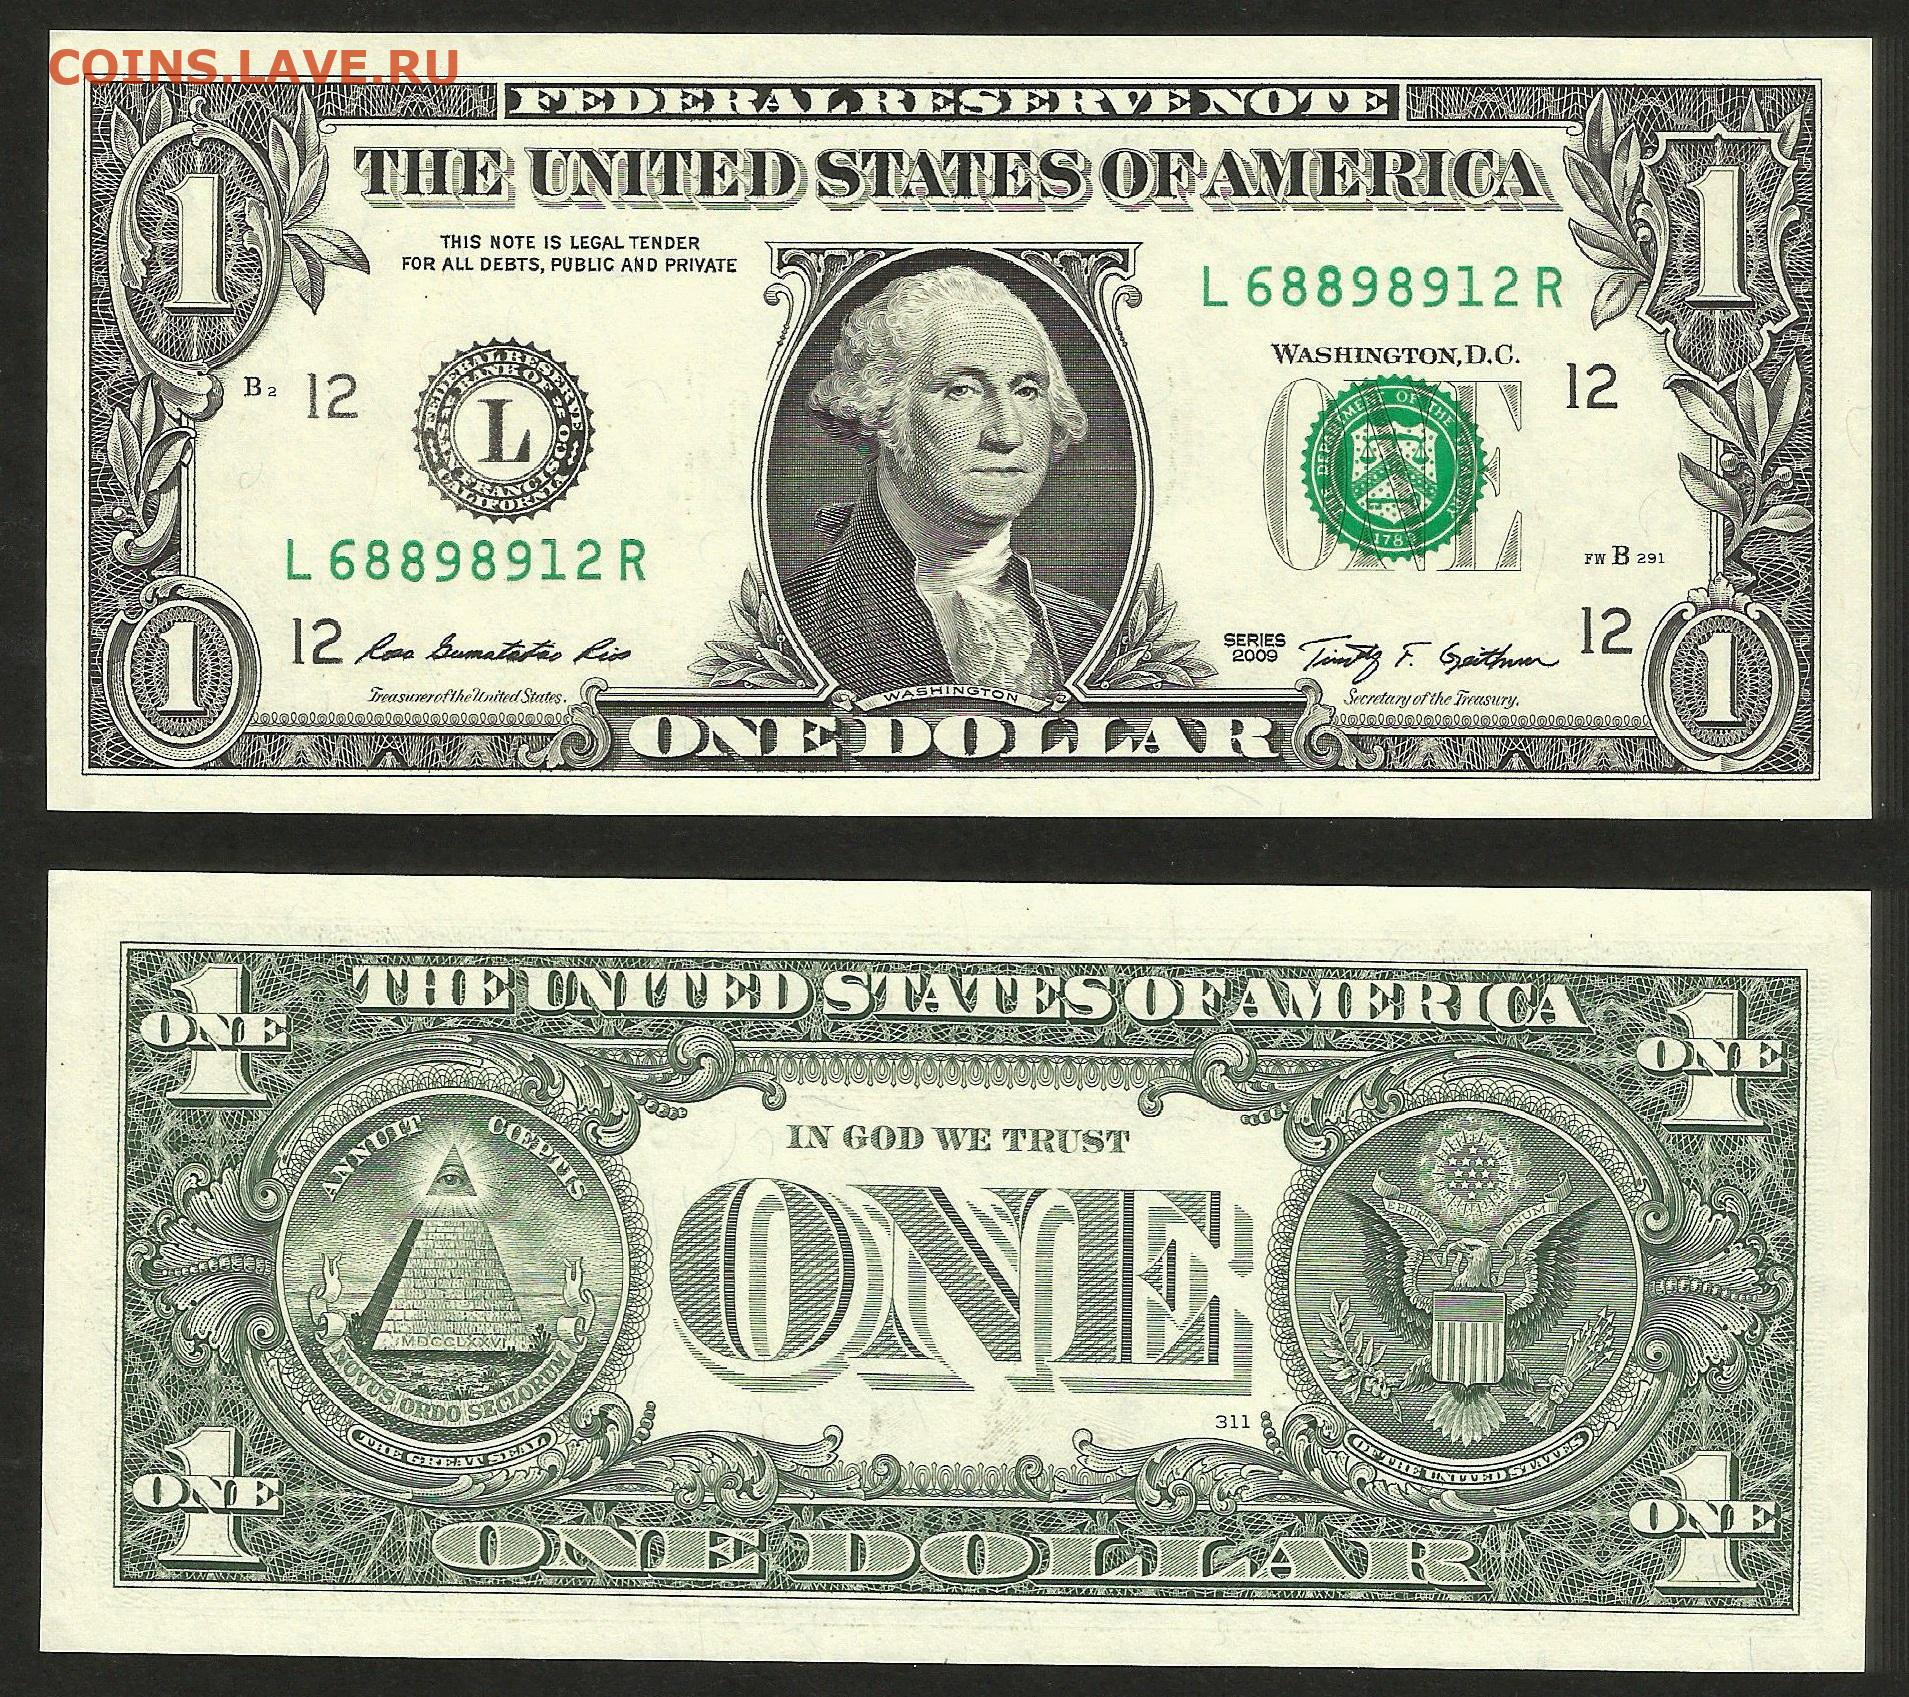 Доллар ис. Банкнота 1 доллар. 1 Доллар США. Долларовая купюра 1 доллар. 1 Доллар 2009 года.